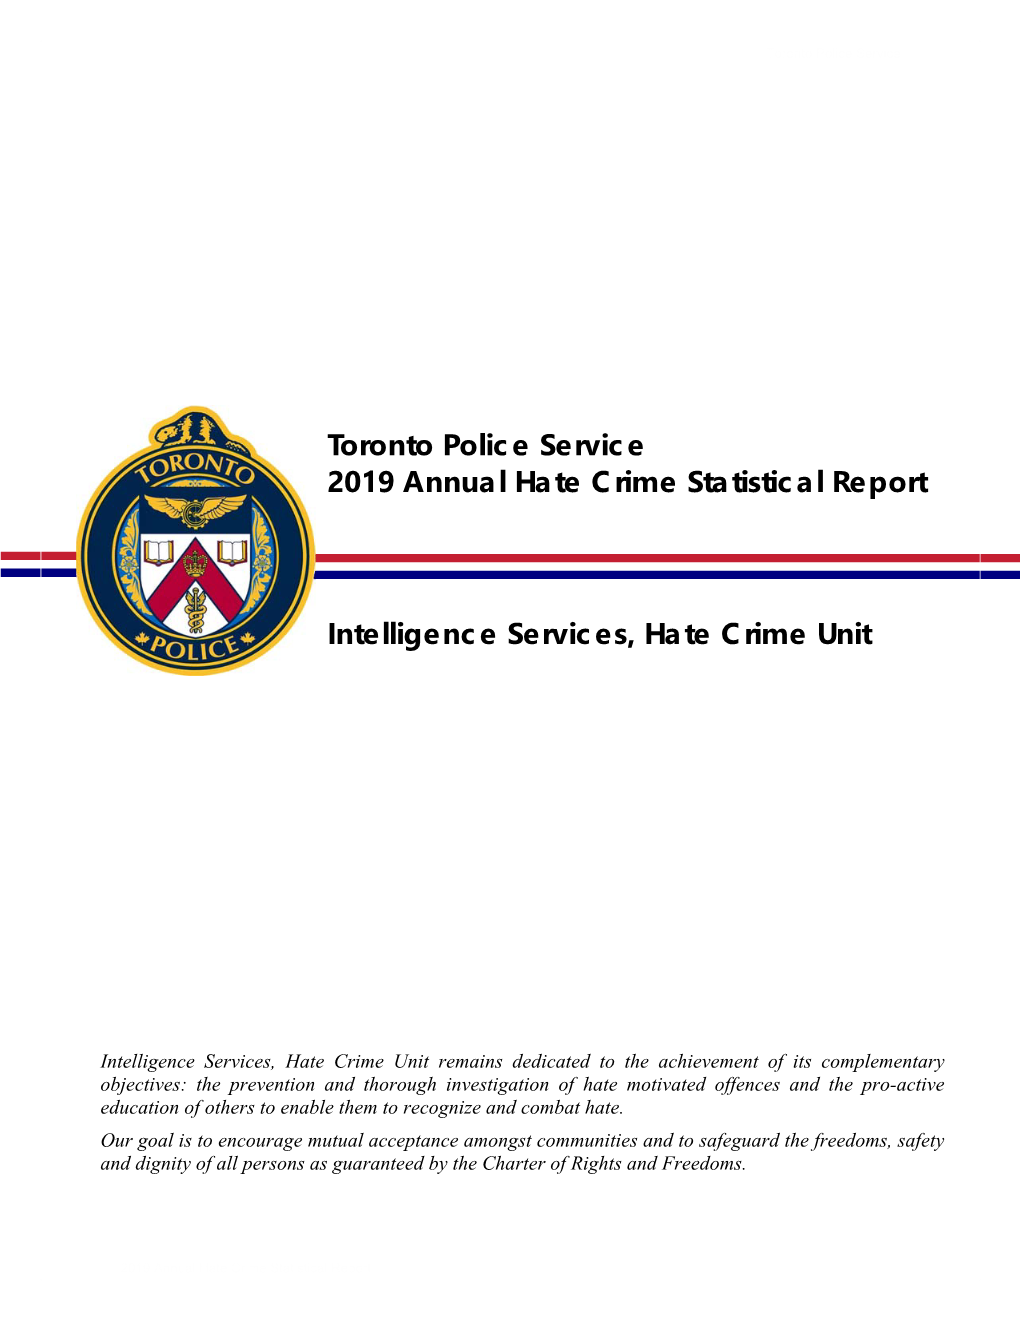 Toronto Police Service 2019 Annual Hate Crime Statistical Report